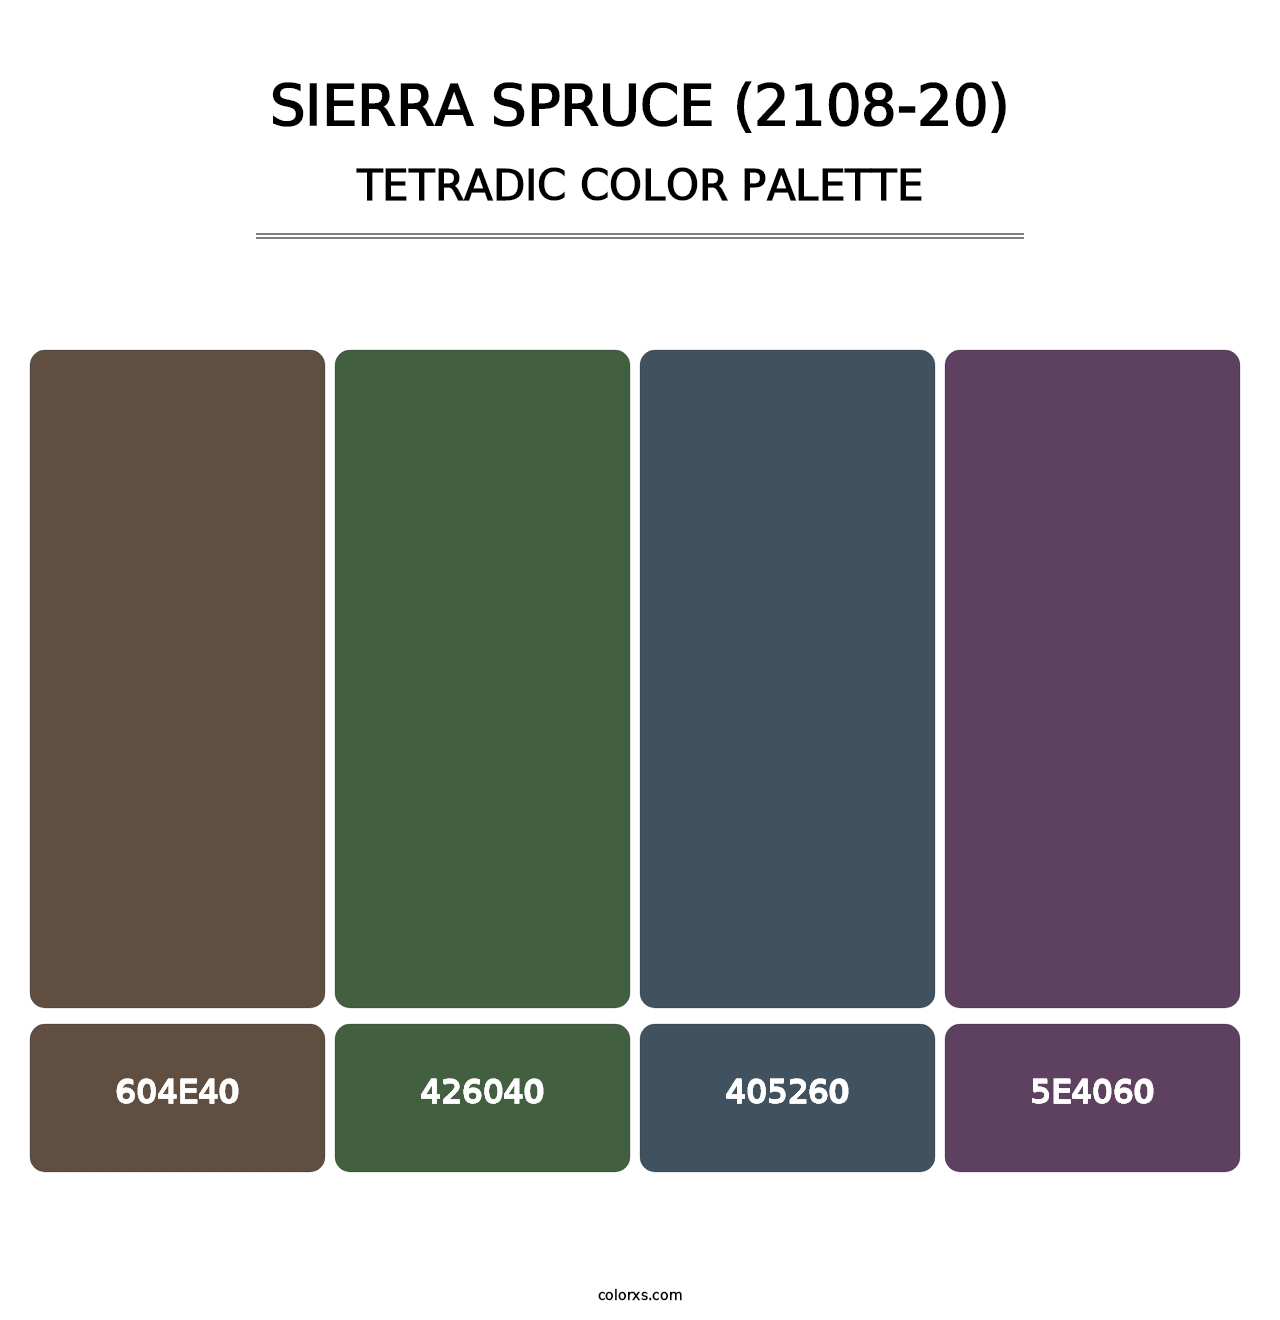 Sierra Spruce (2108-20) - Tetradic Color Palette